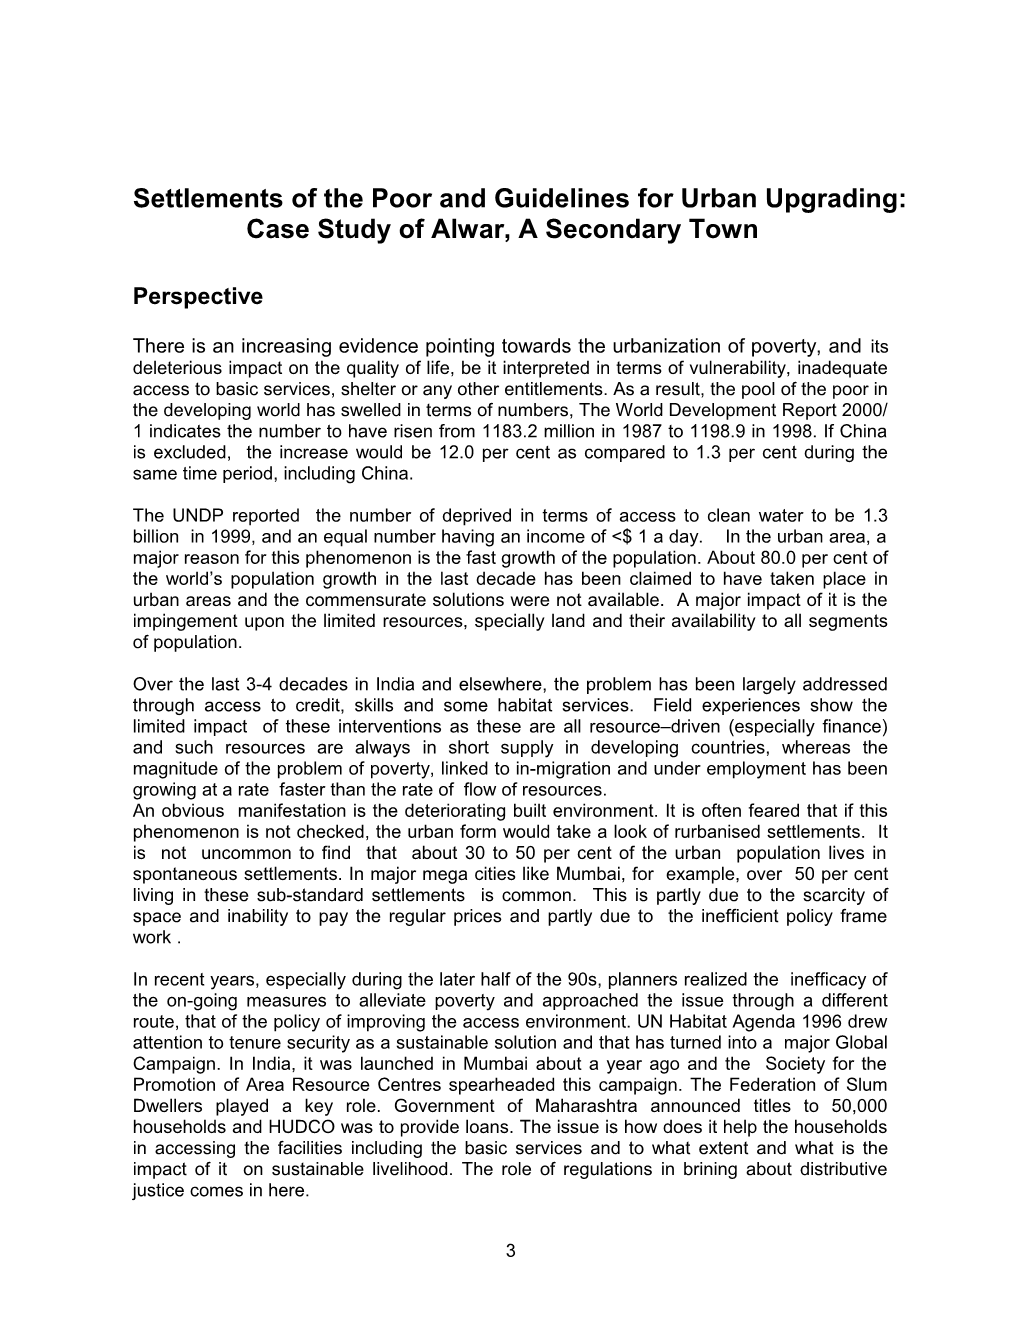 Regulations for Urban Upgrading Case Study of Alwar